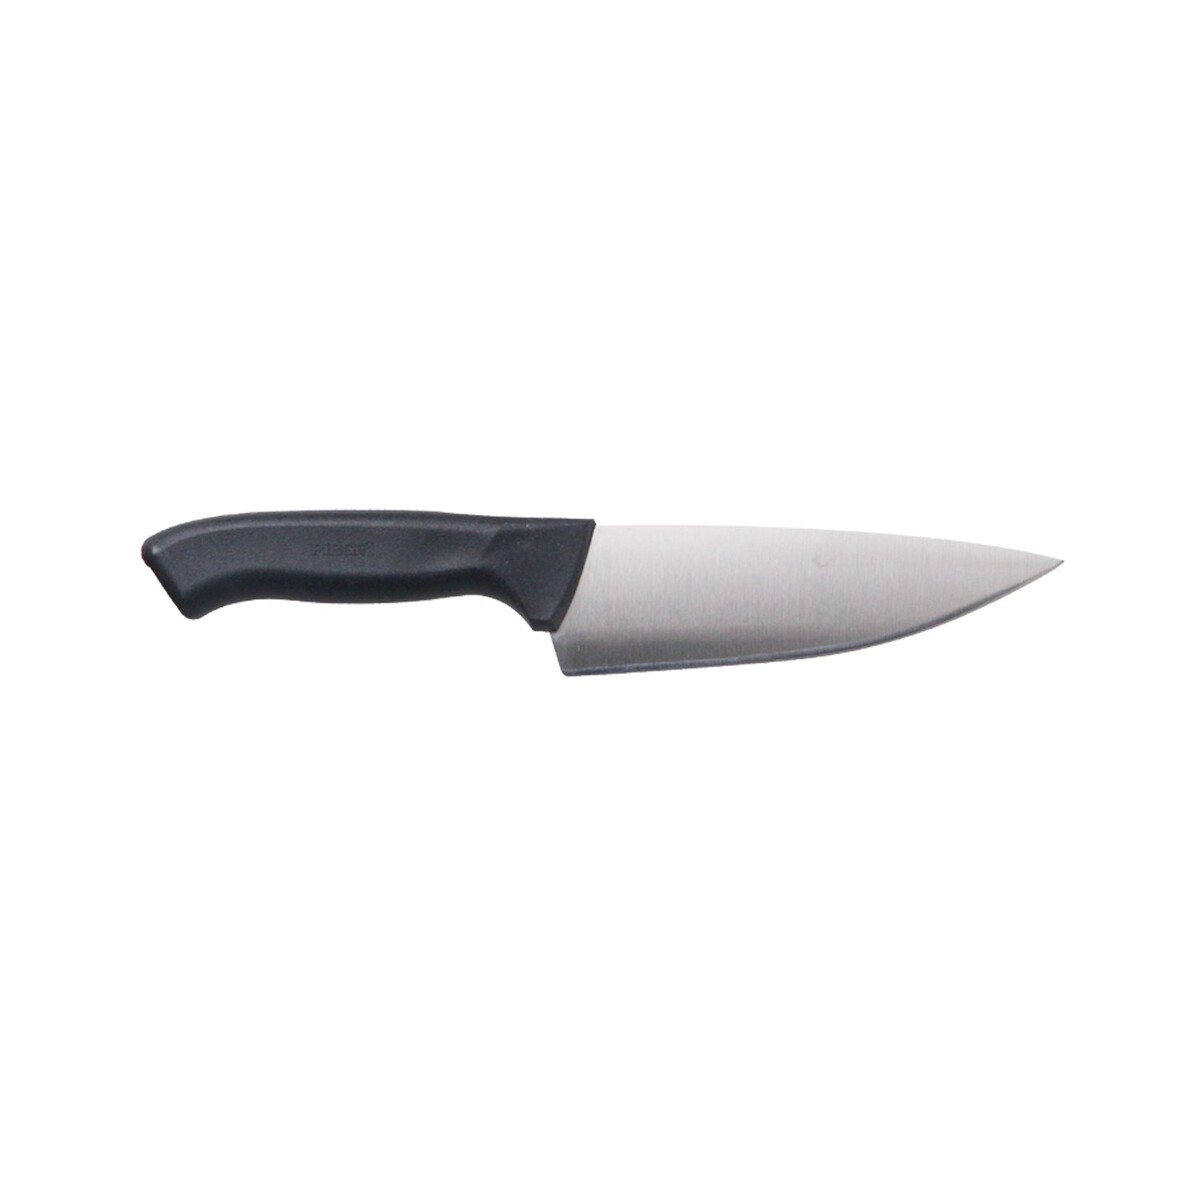 Pirge Cooks Knife 38159 16cm